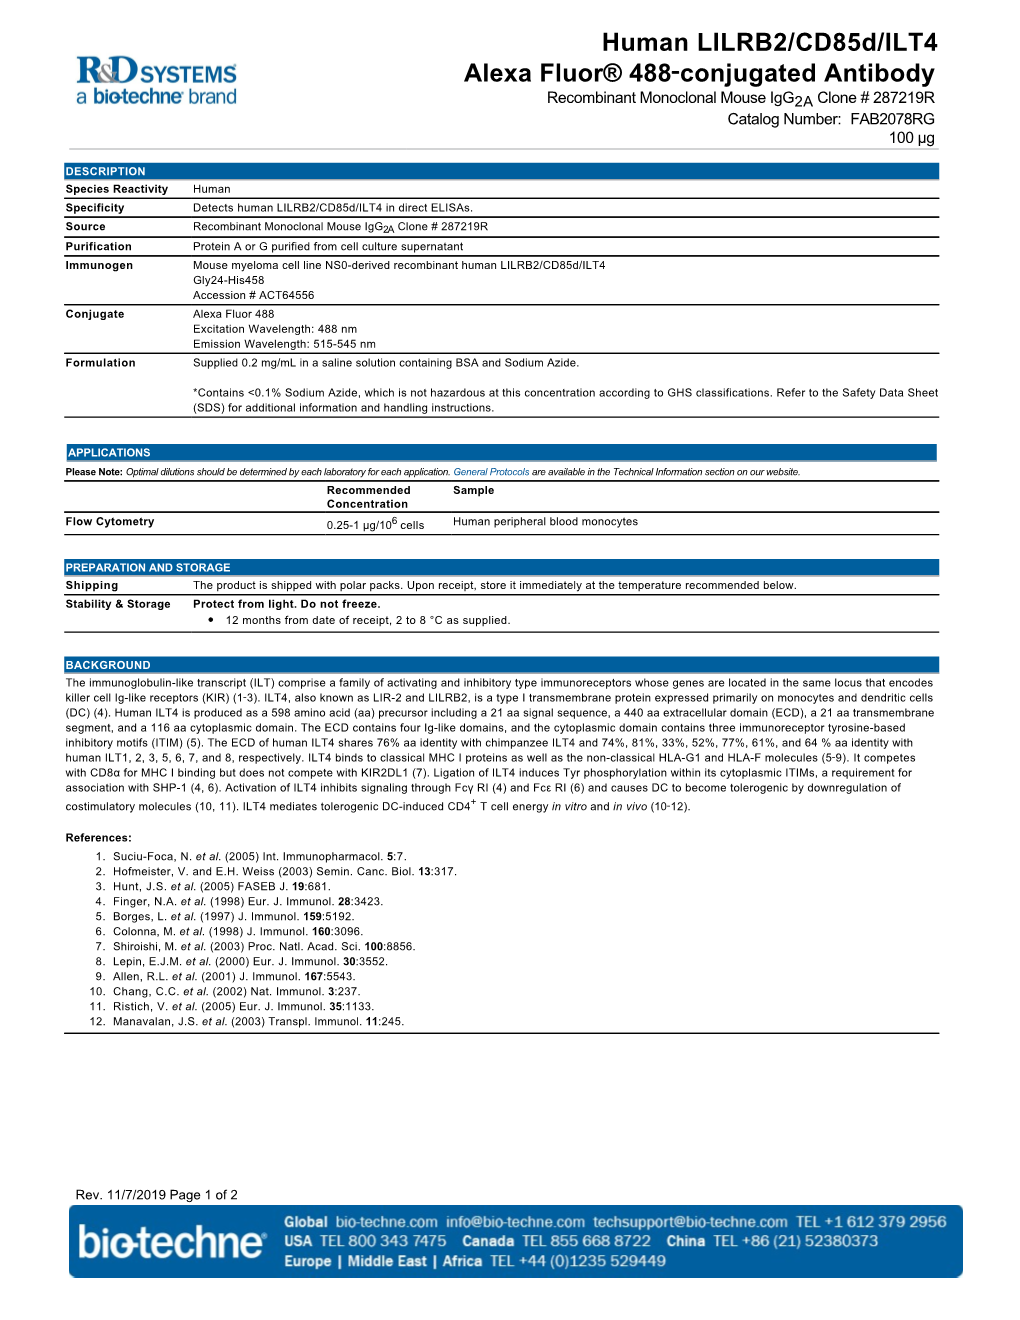 Human LILRB2/Cd85d/ILT4 Alexa Fluor® 488‑Conjugated Antibody